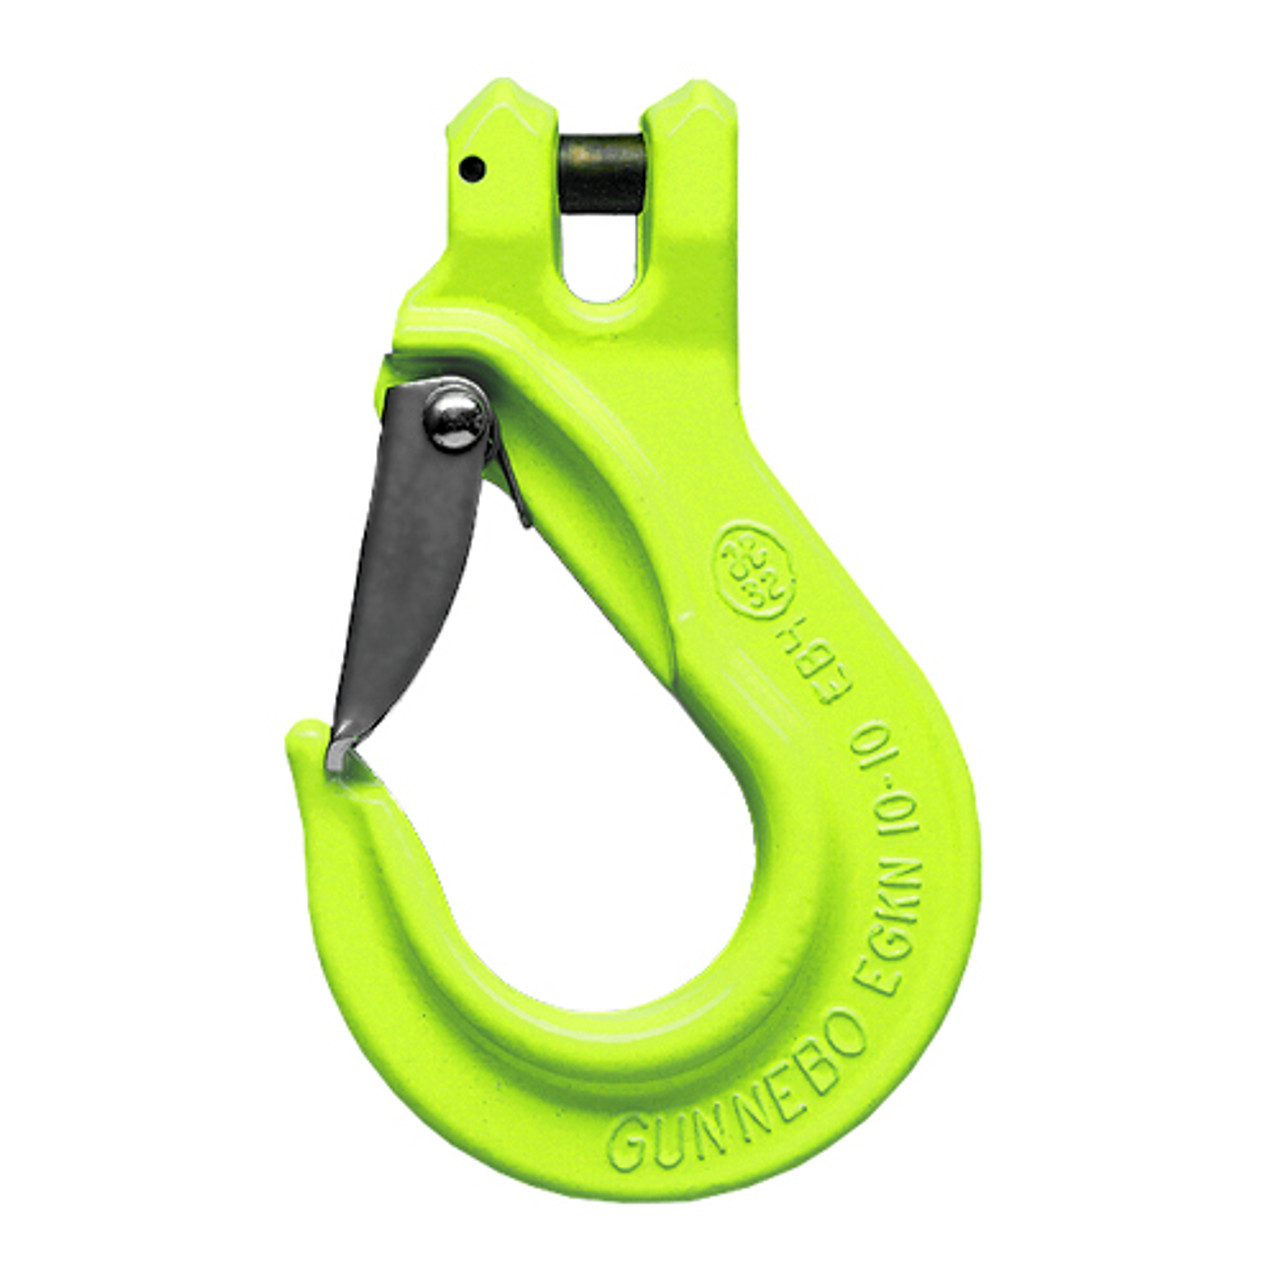 Safety Hoist Hook-Galvanized (Size 23)